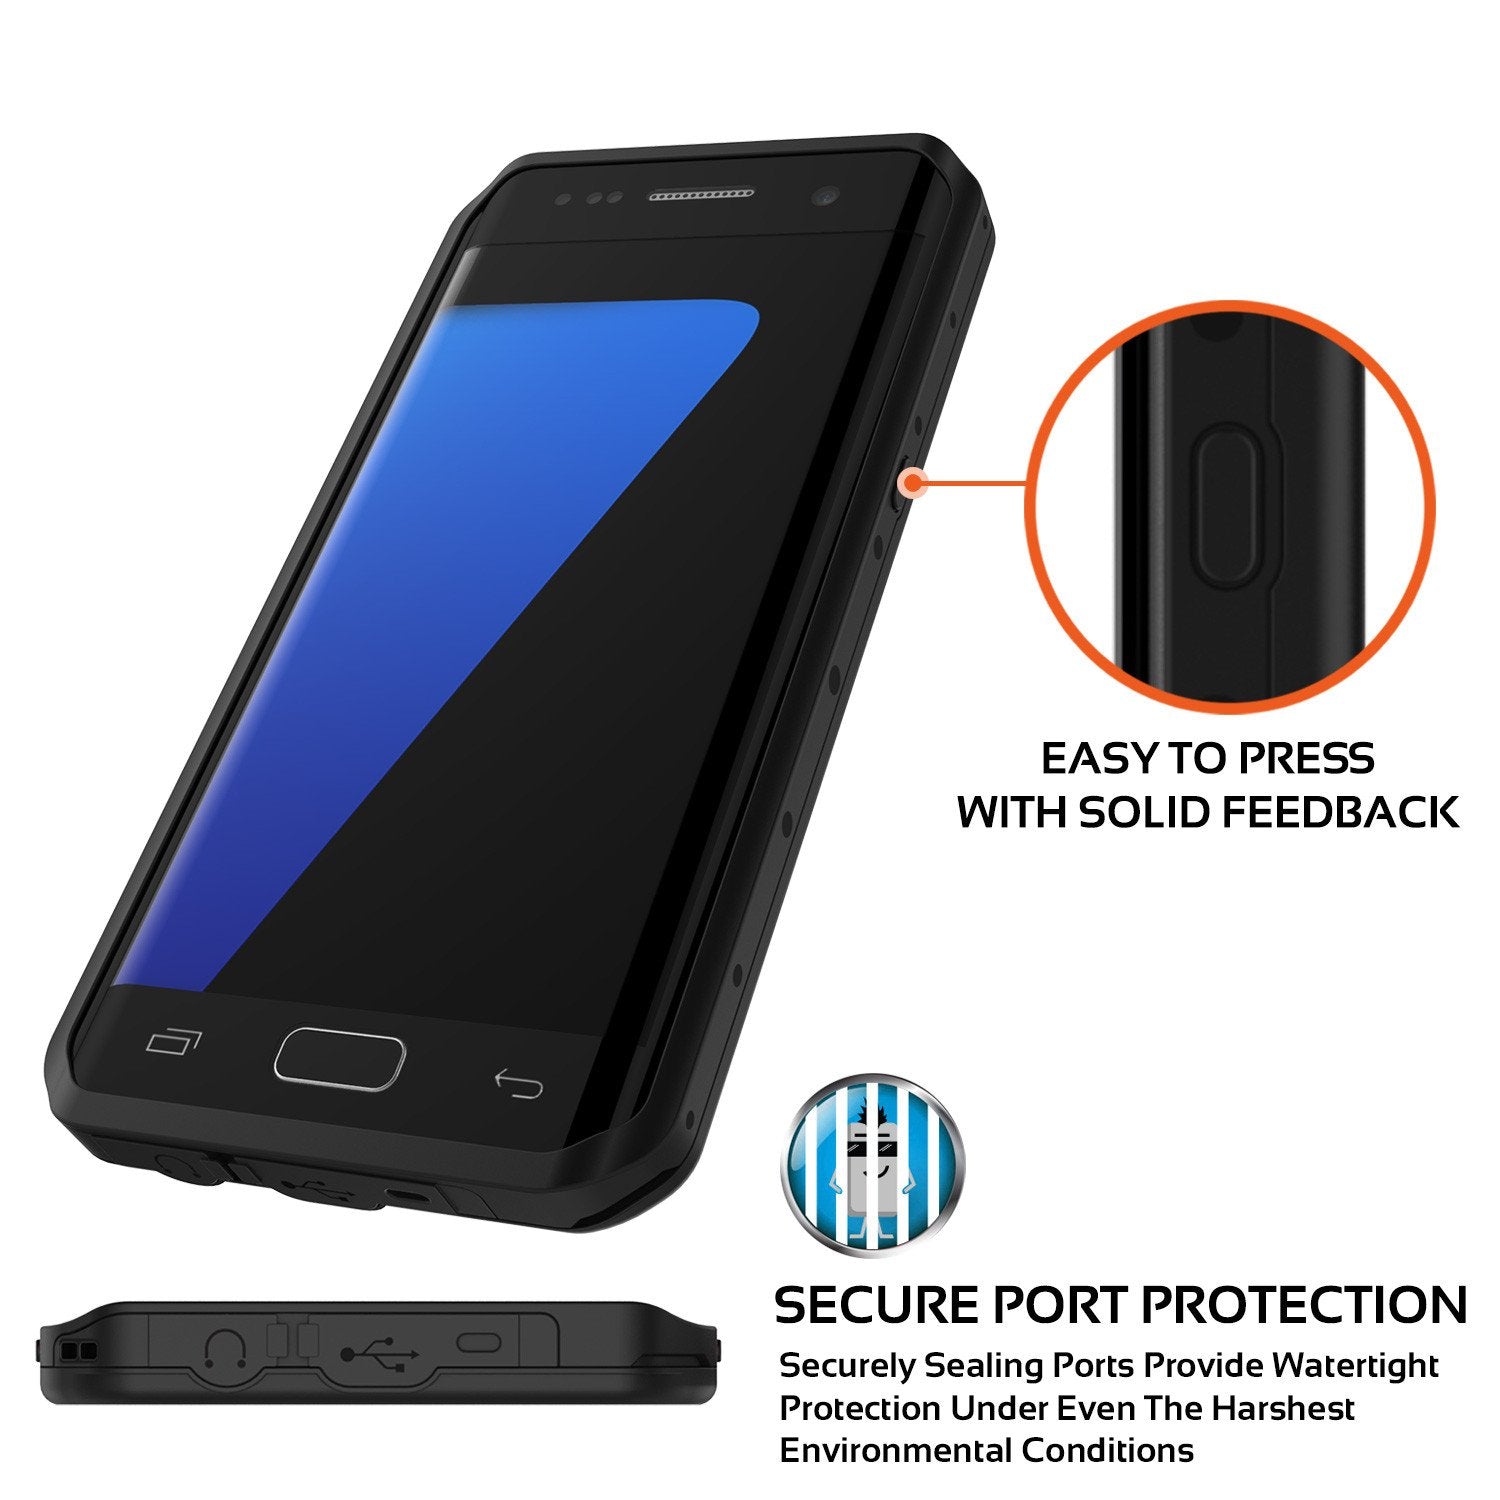 Galaxy S7 EDGE Waterproof Case PunkCase StudStar Black Thin 6.6ft Underwater IP68 Shock/Snow Proof - PunkCase NZ